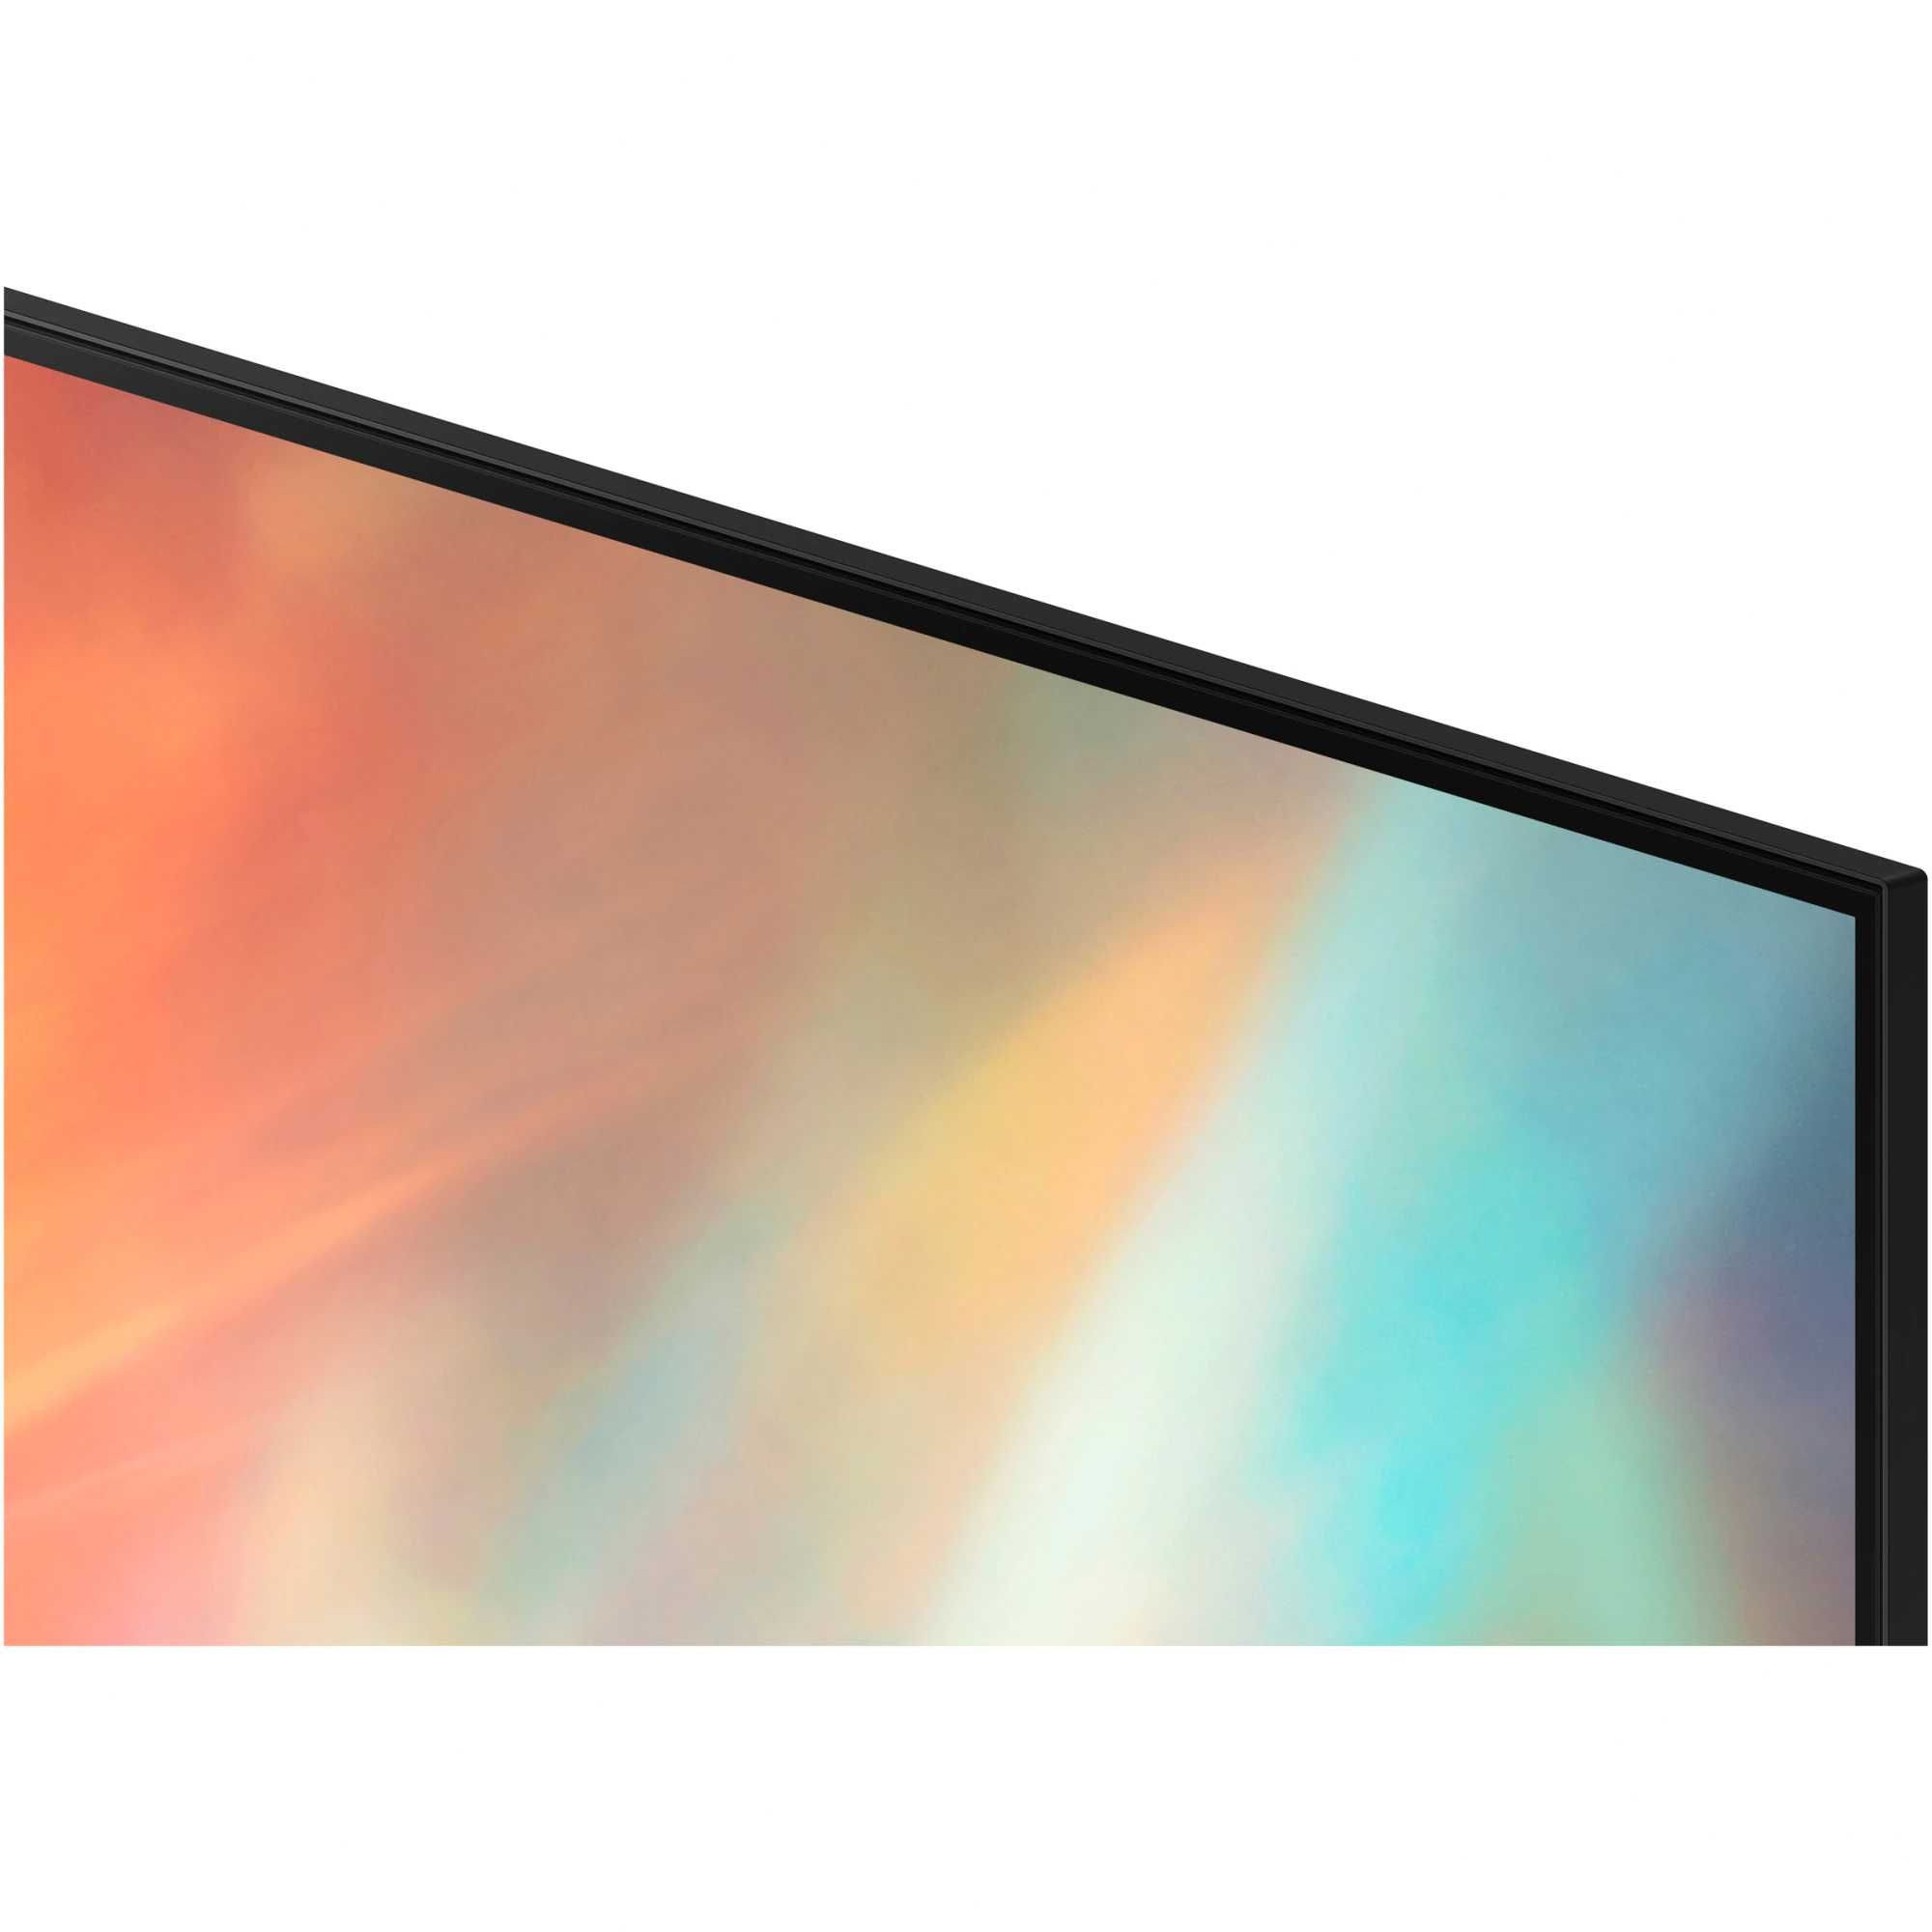 Televizor Smart Samsung, 43inch (108cm), 4K Ultra HD, HDR 10+